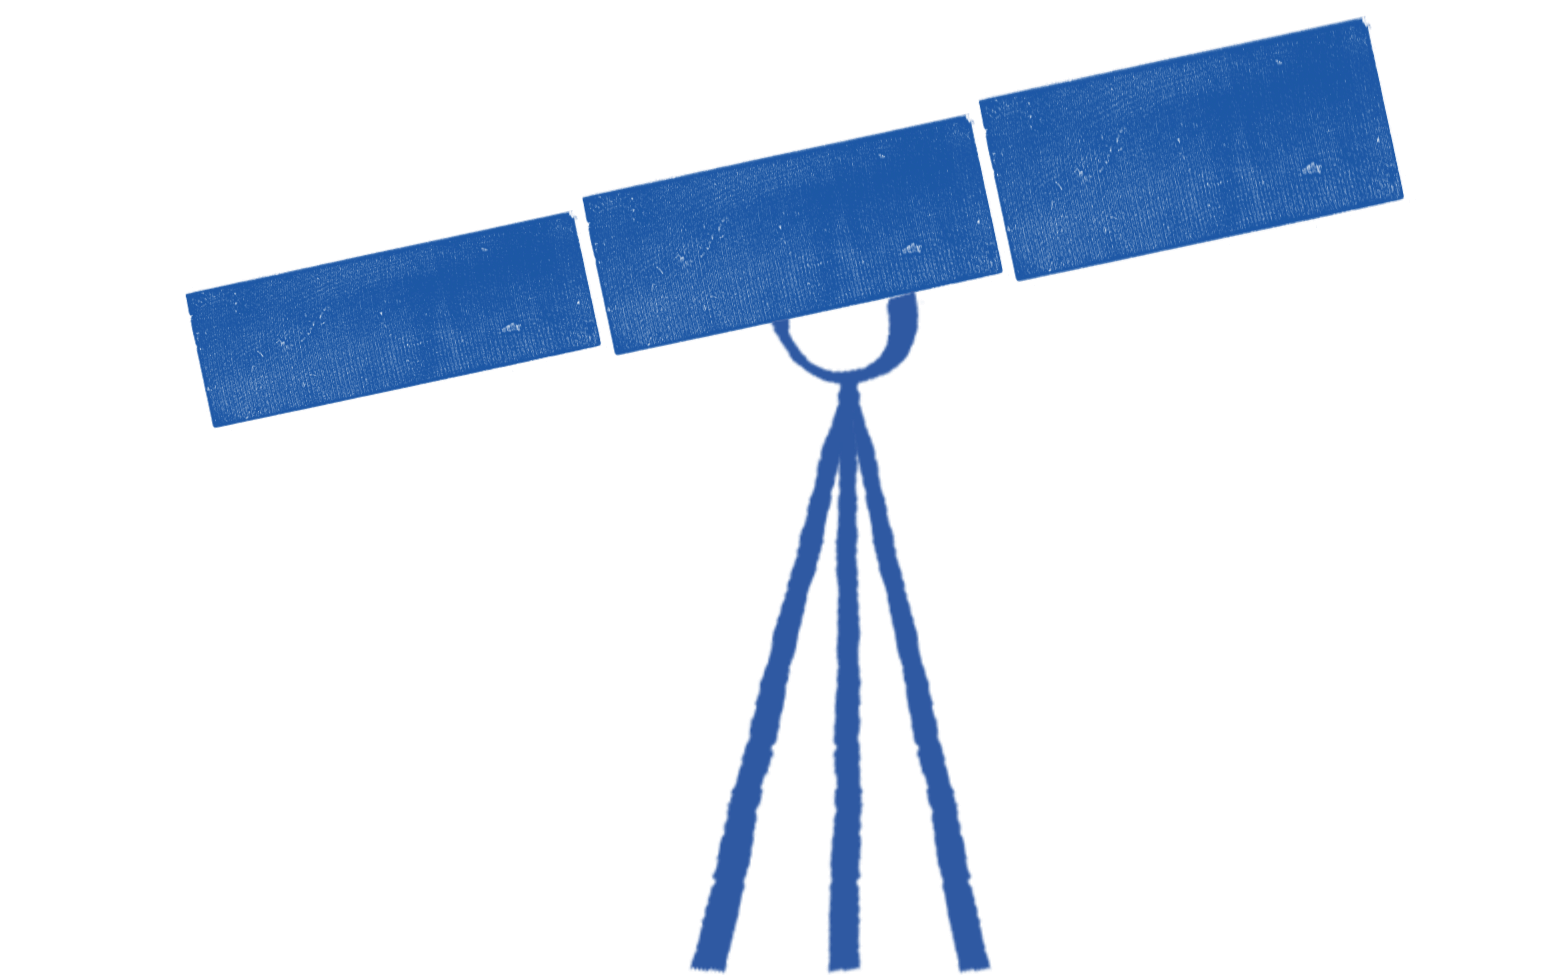 Illustration of a telescope